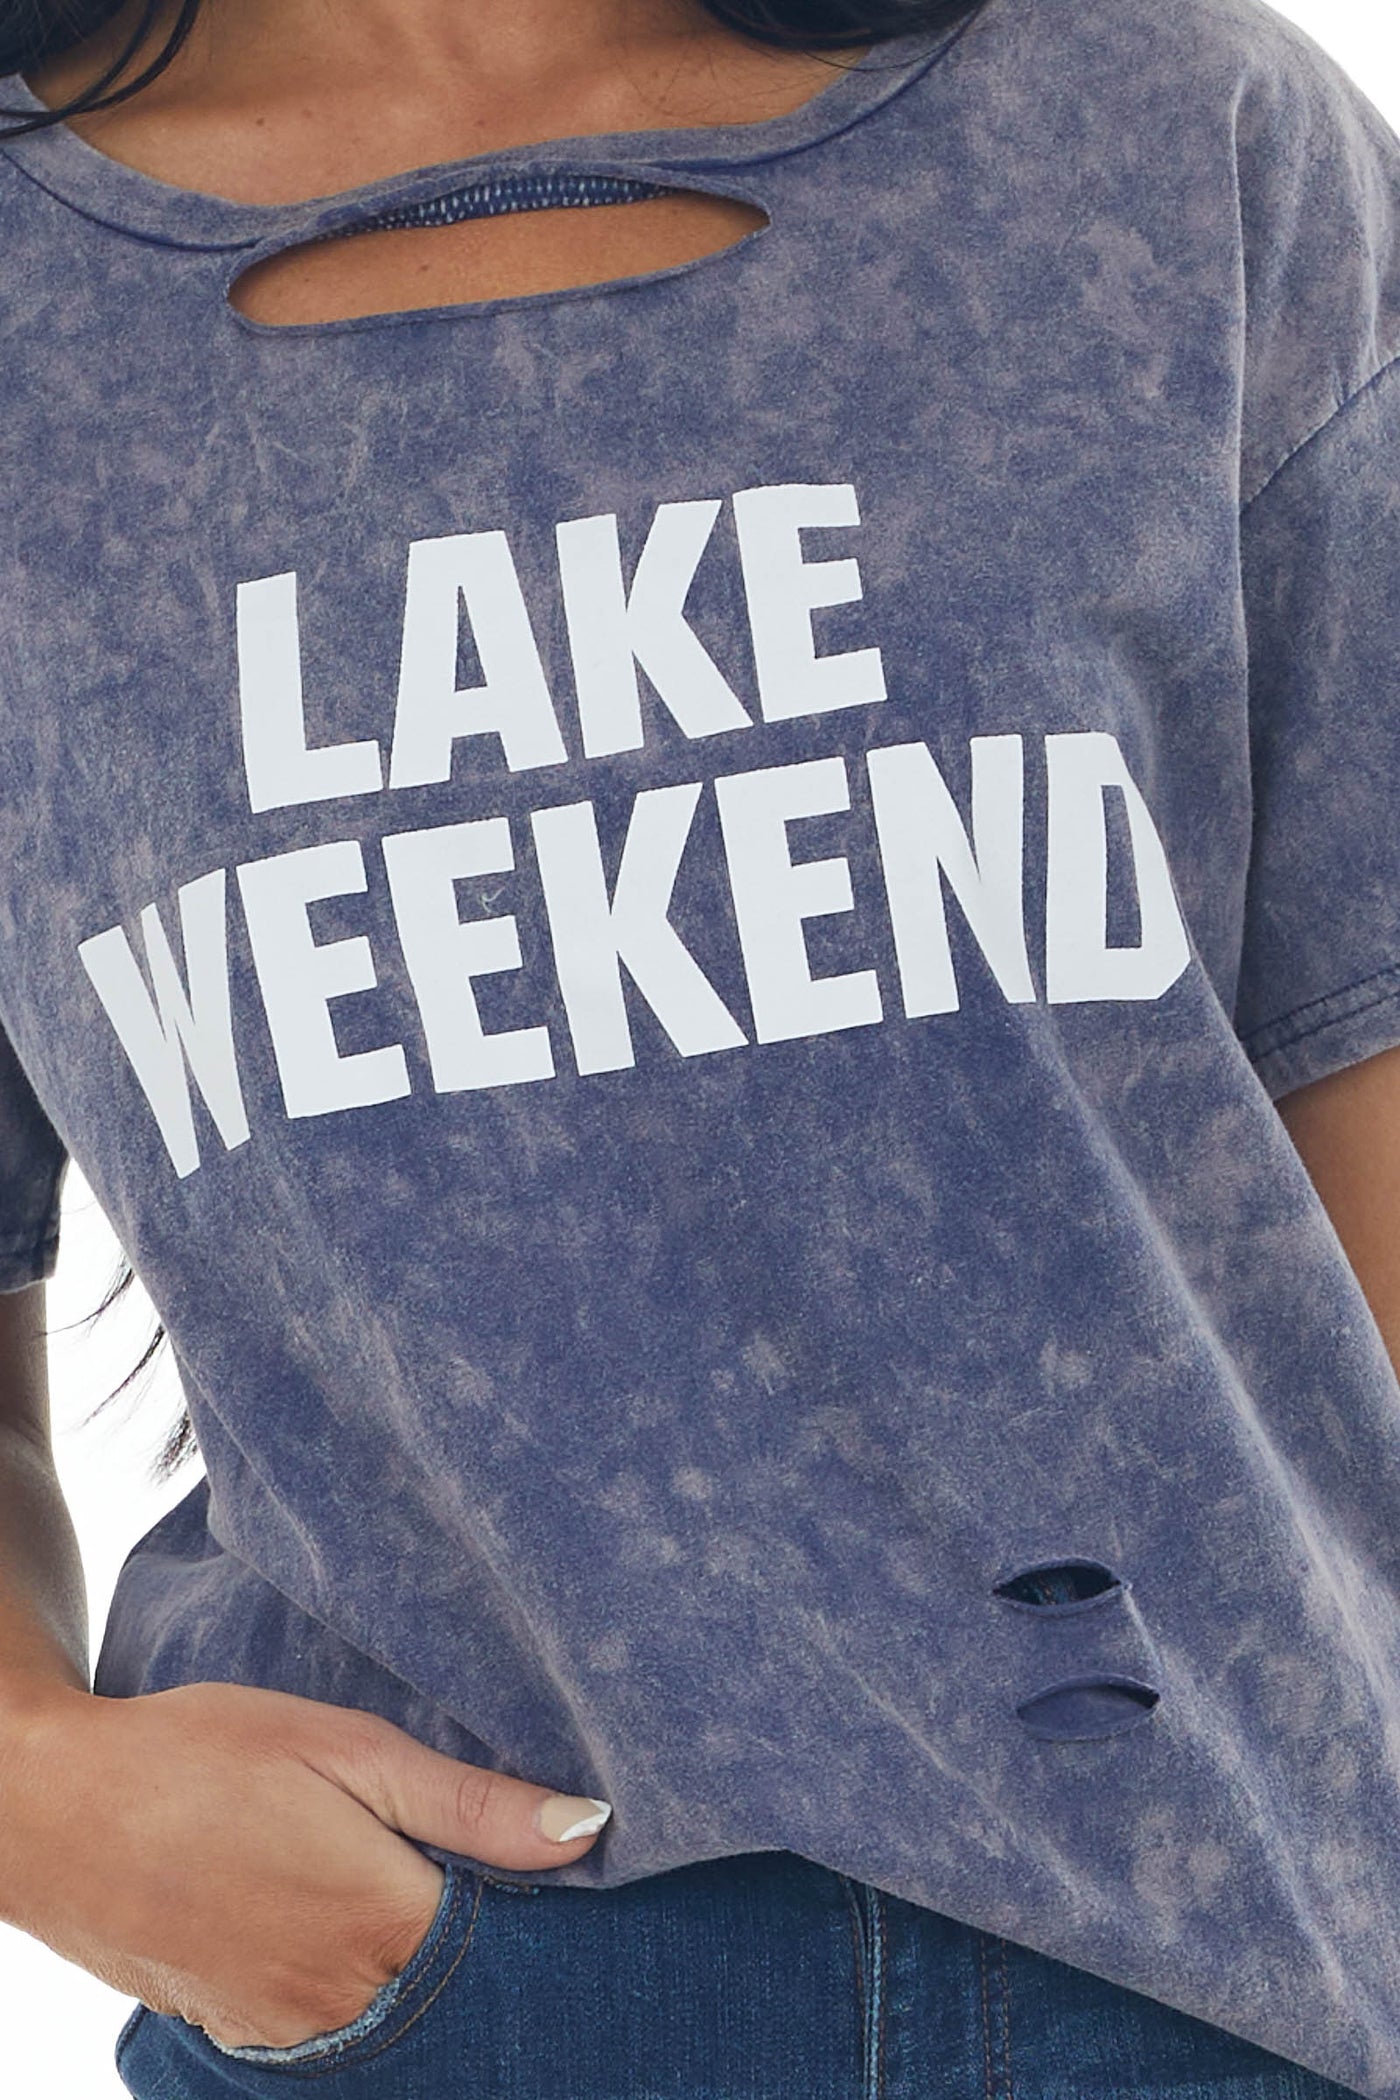 Dark Dusty Blue Washed 'Lake Weekend' Knit Top